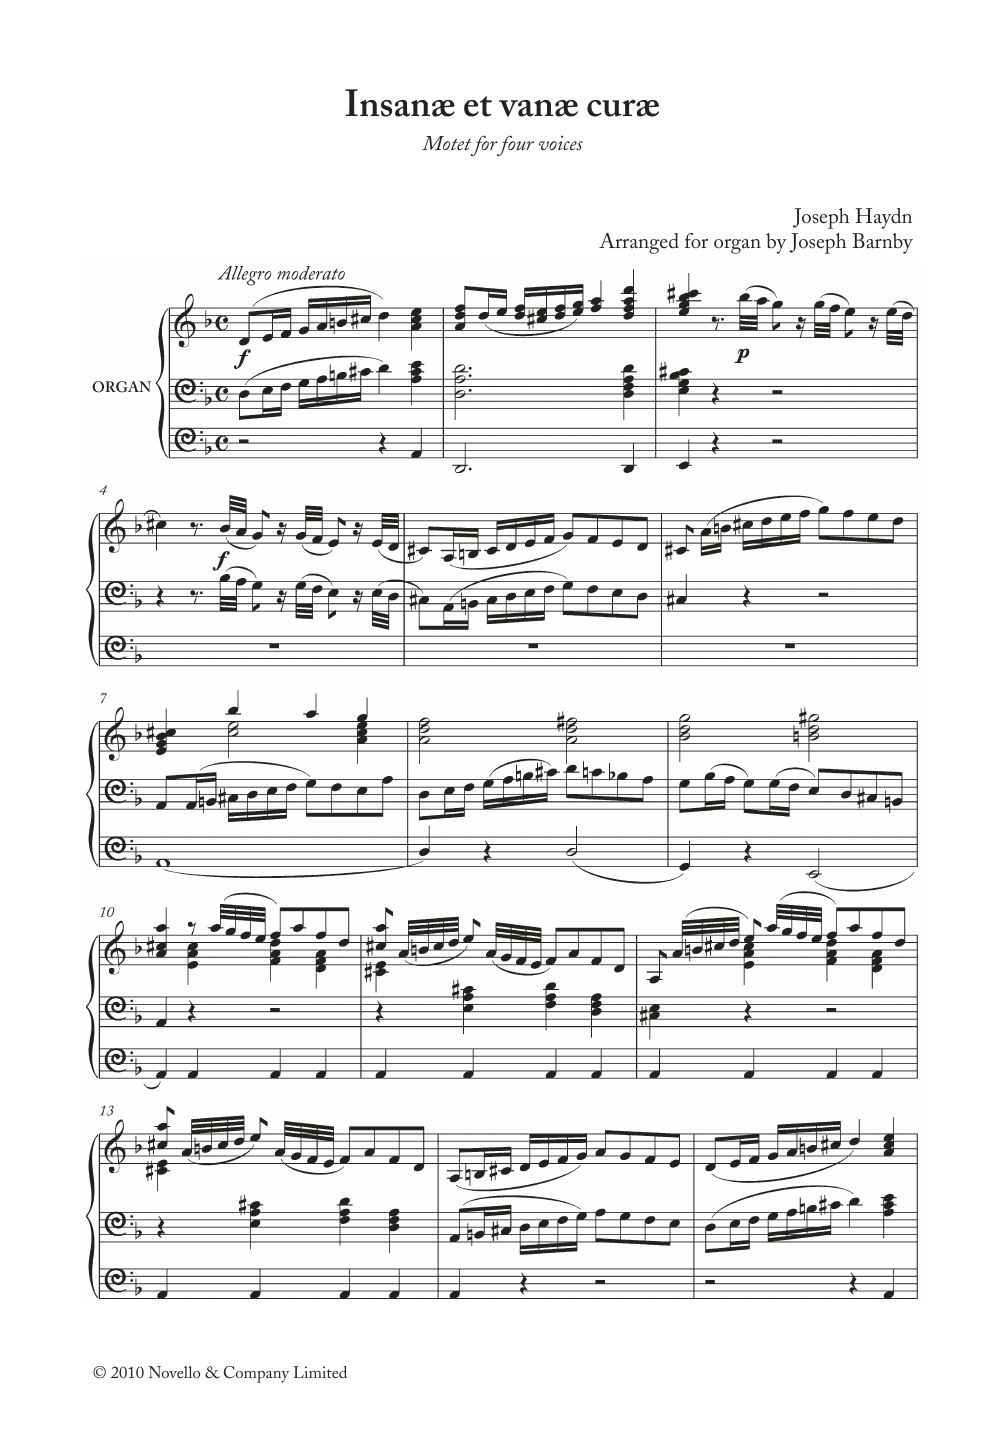 Download Franz Joseph Haydn Insanae Et Vanae Curae Sheet Music and learn how to play Choir PDF digital score in minutes